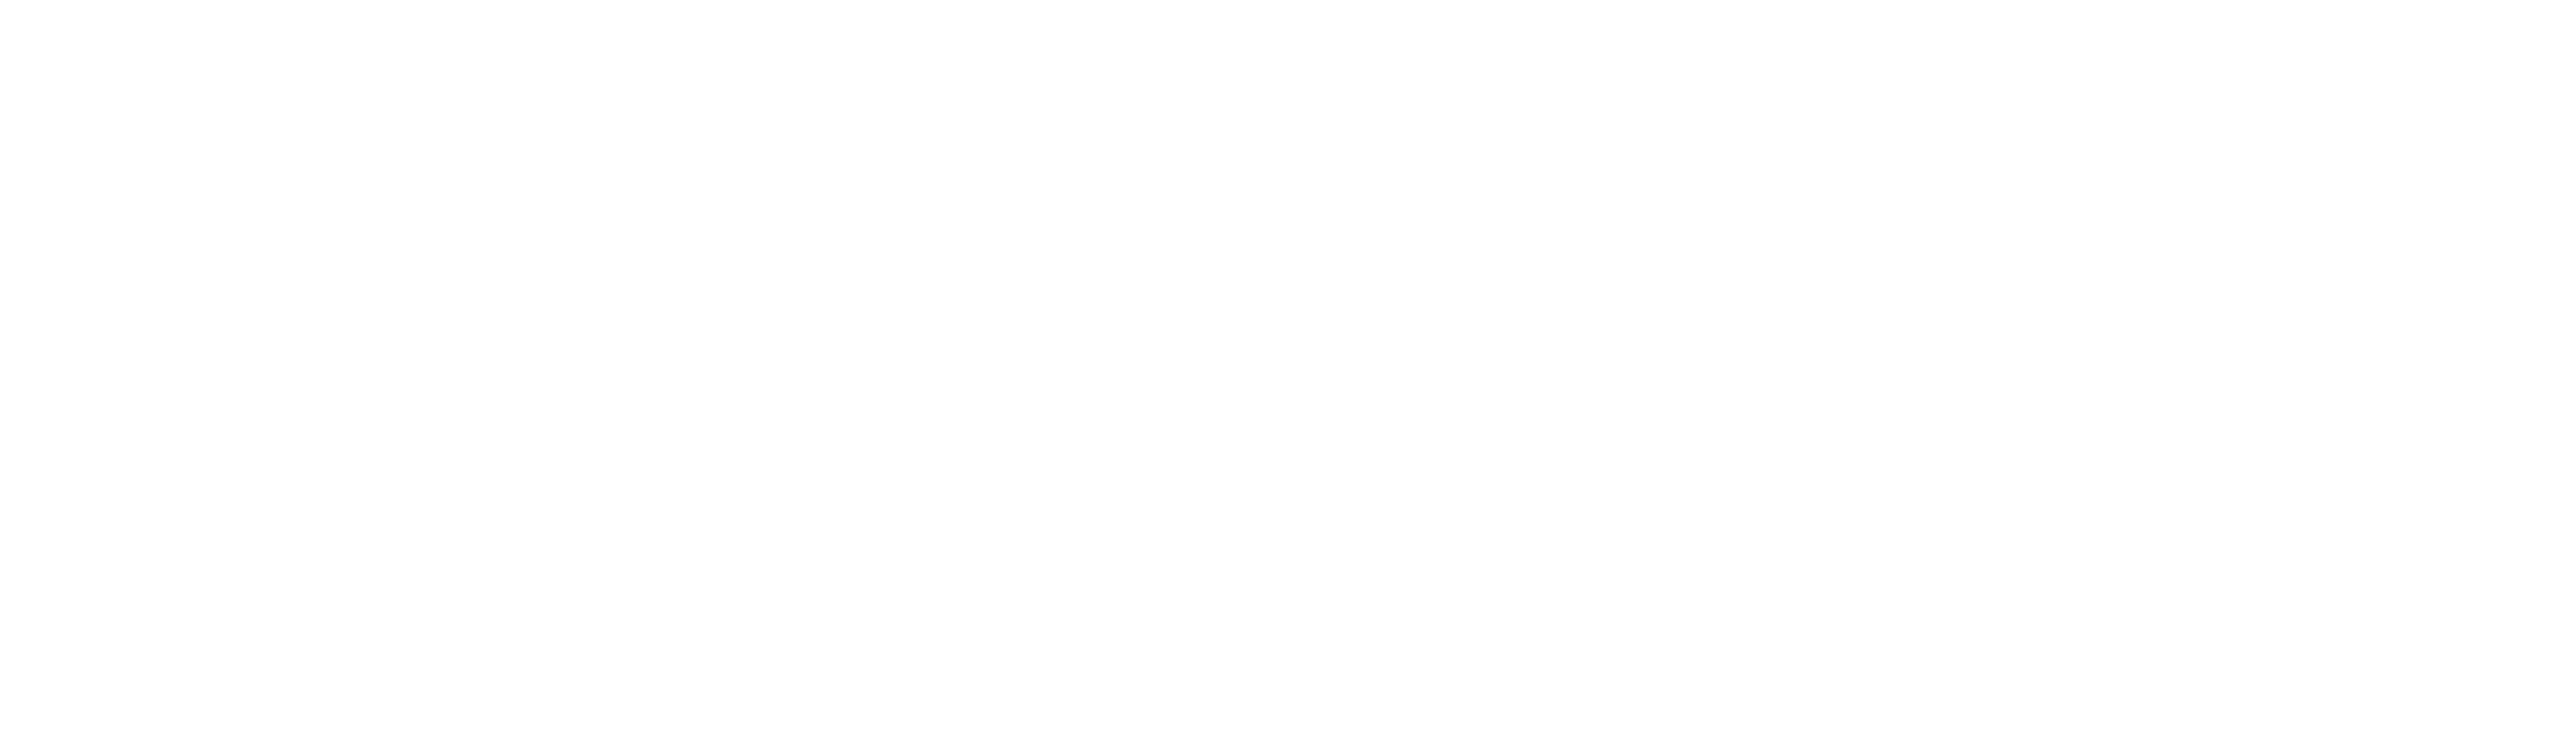 EUROTECH AMERICAL LOGO FIN1C TRANS - ESwitch Power Switch